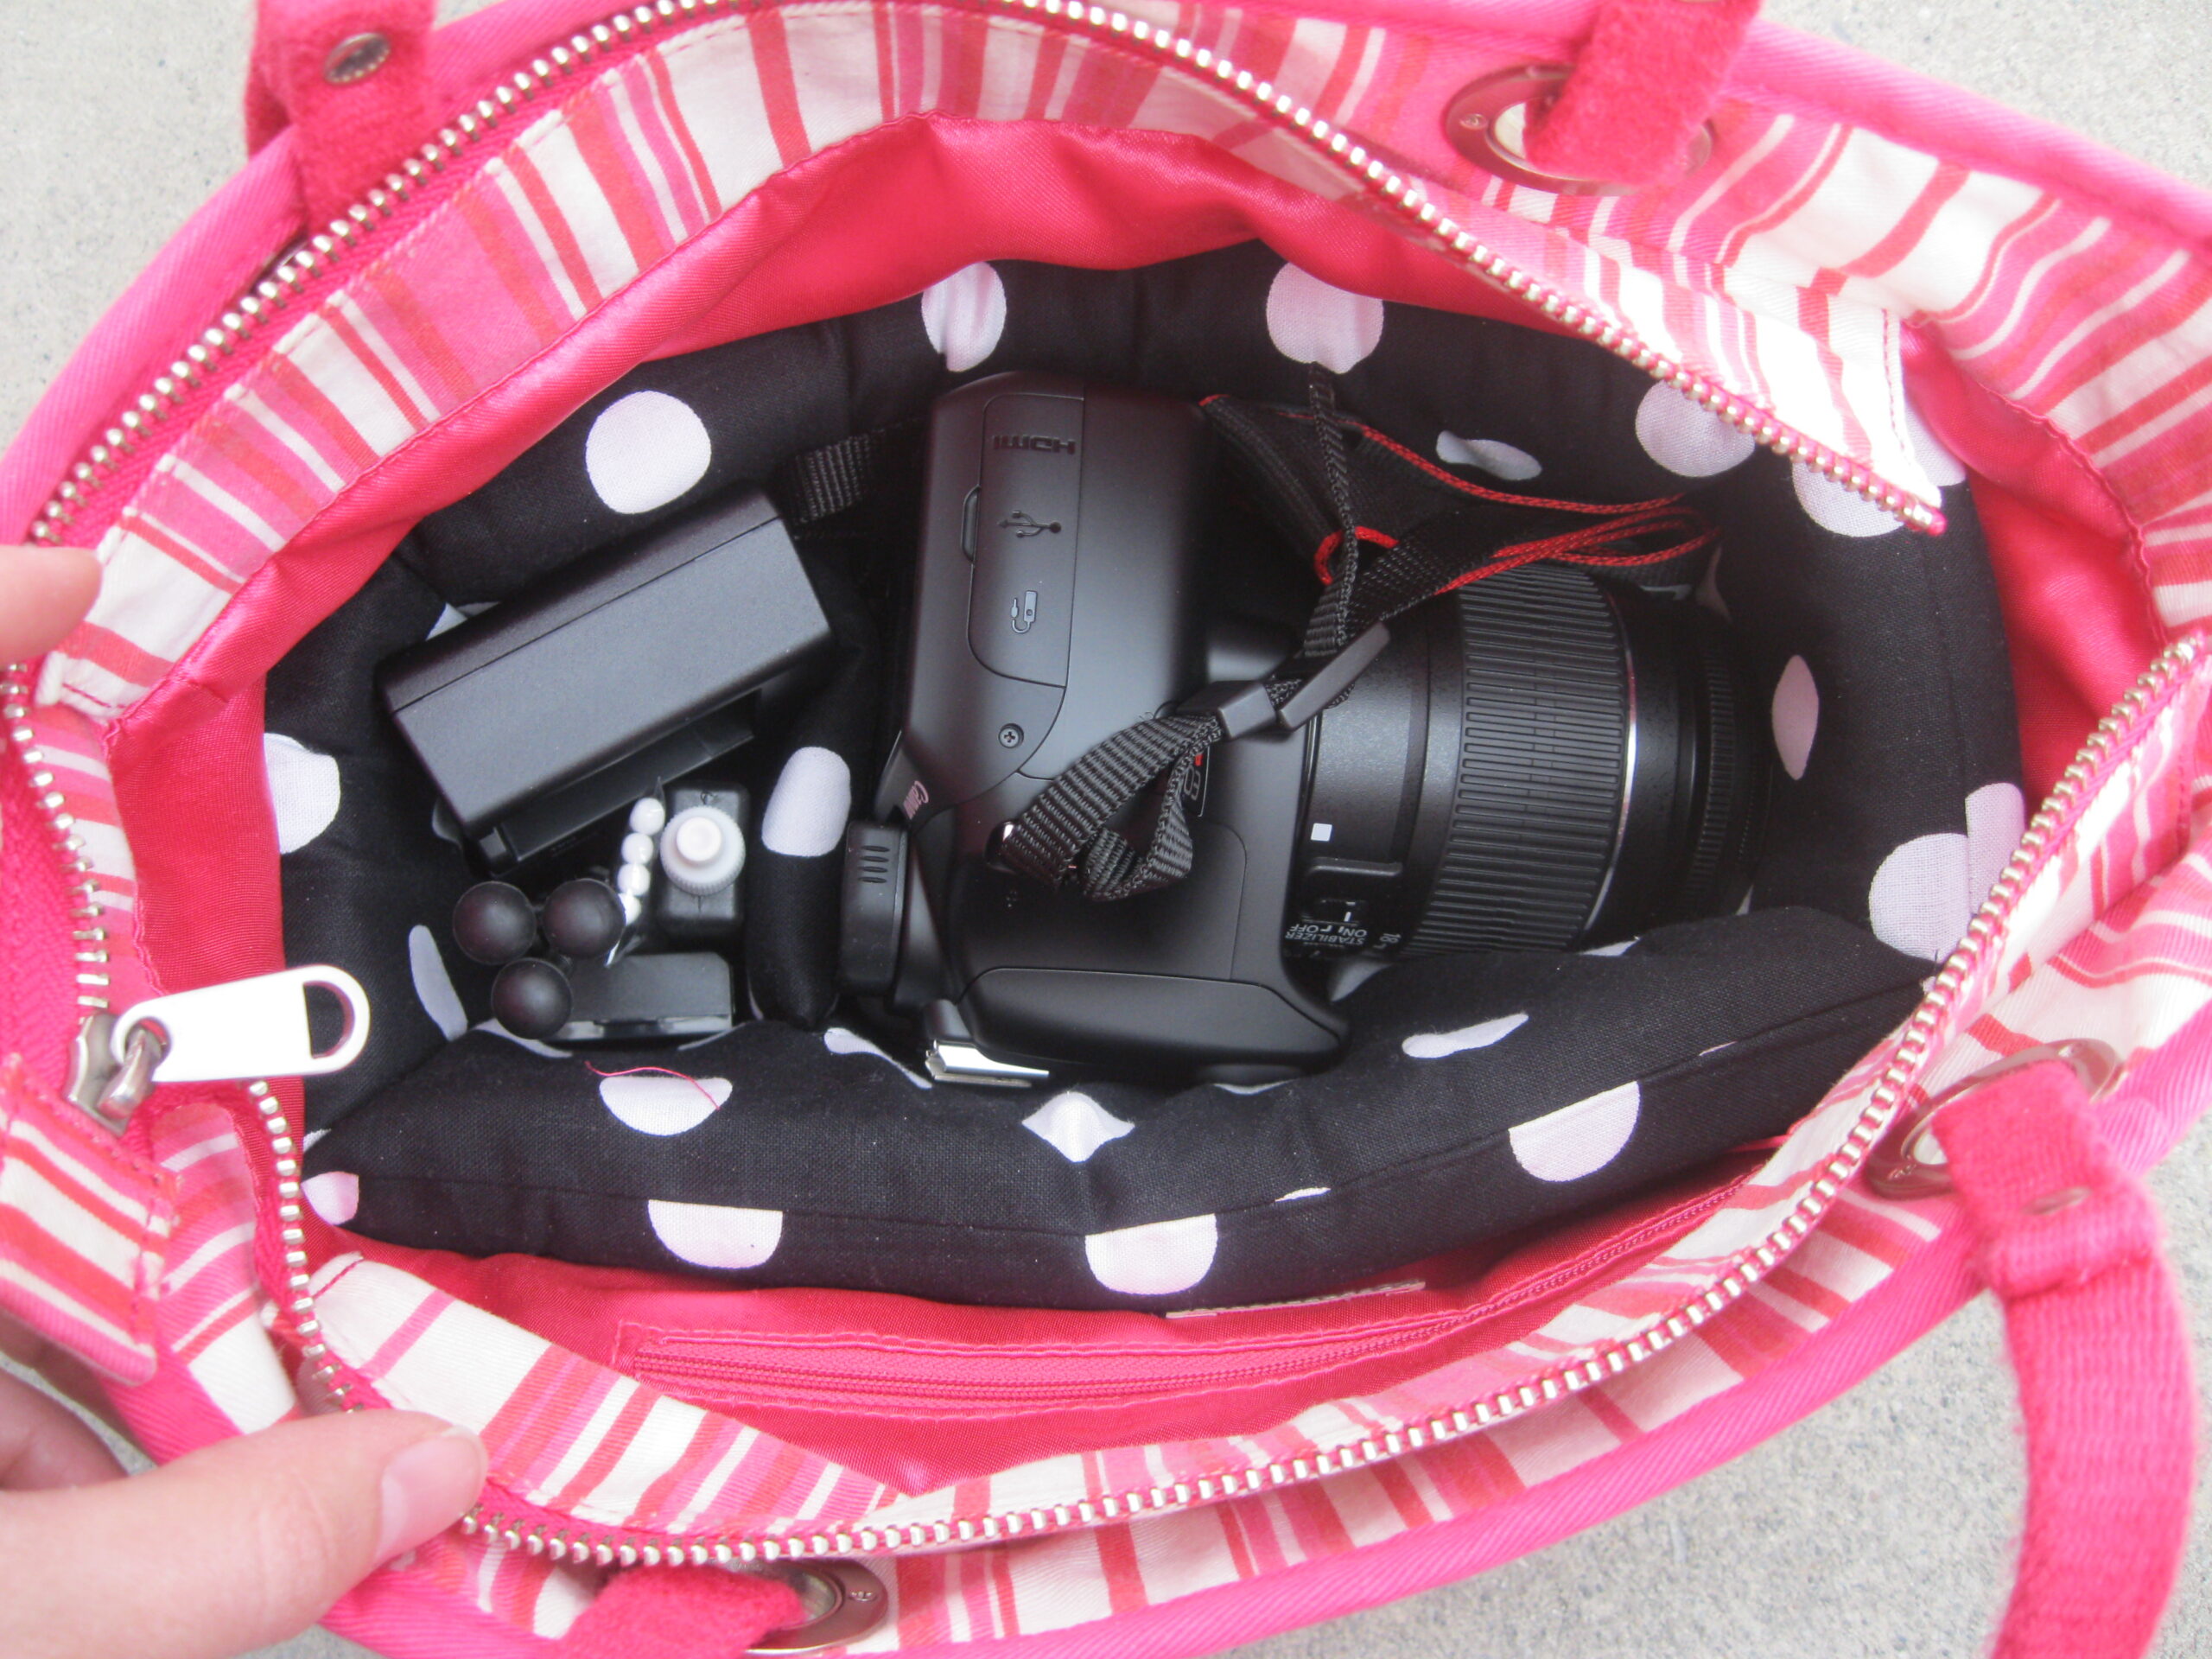 camera bag insert for purse